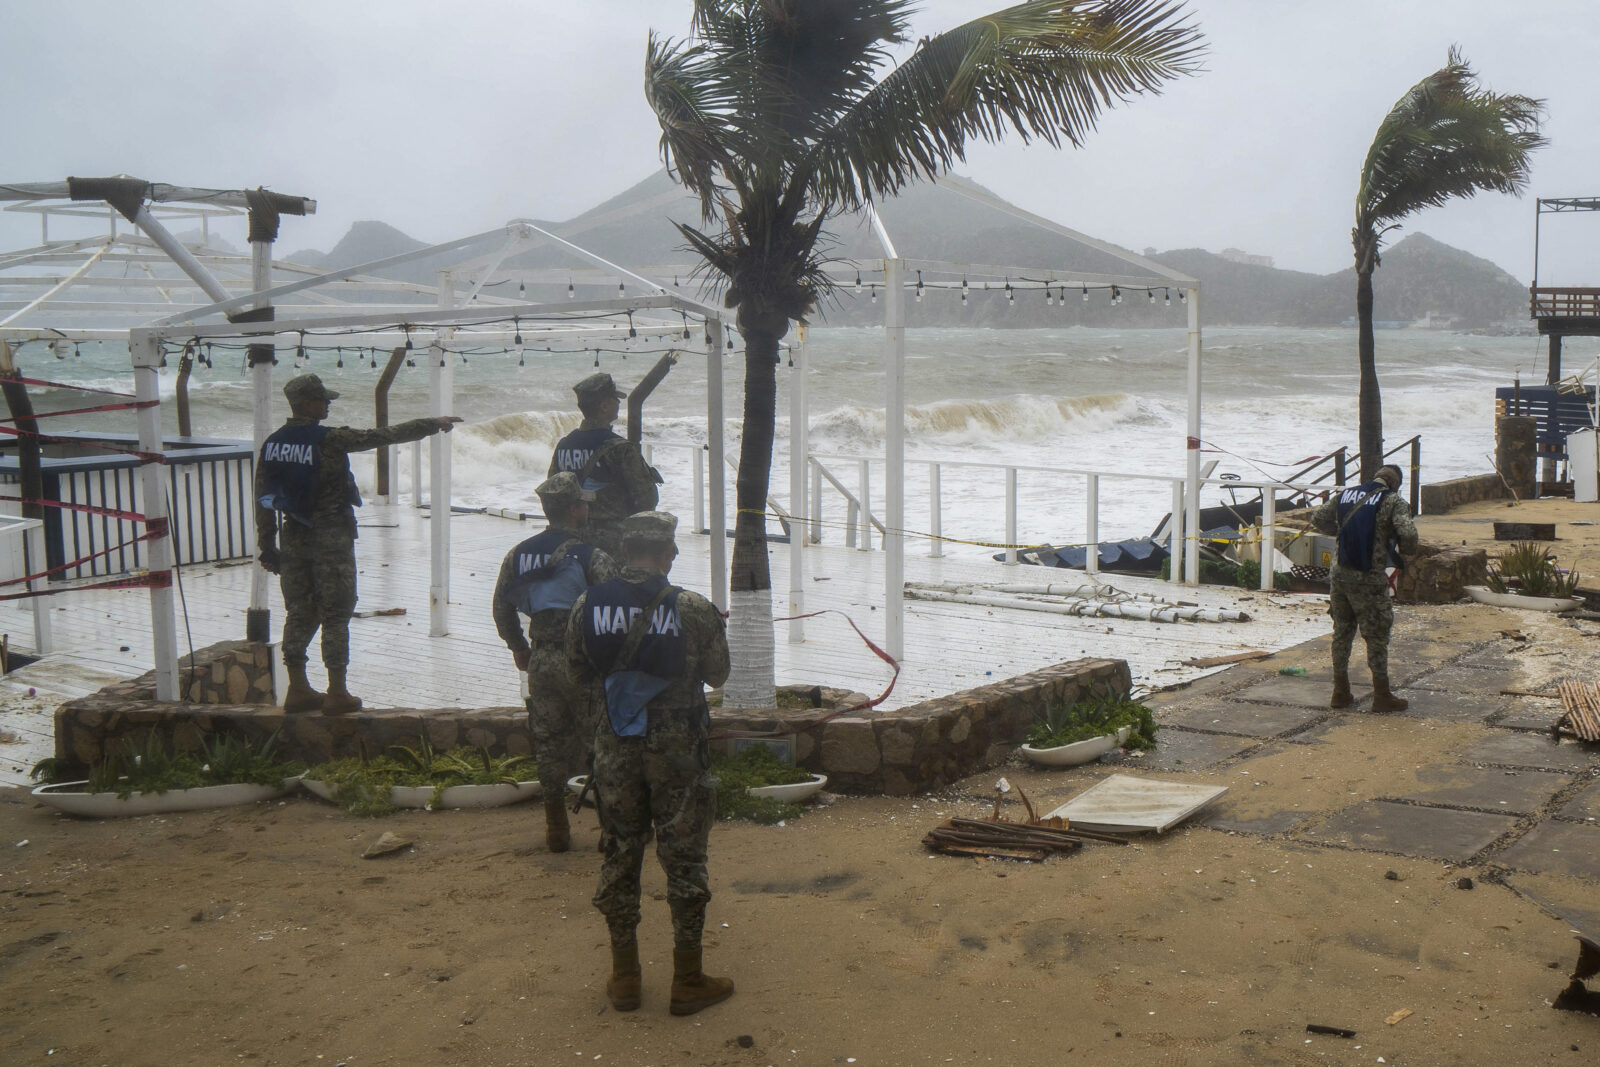 Hurricane Otis batters Acapulco before weakening